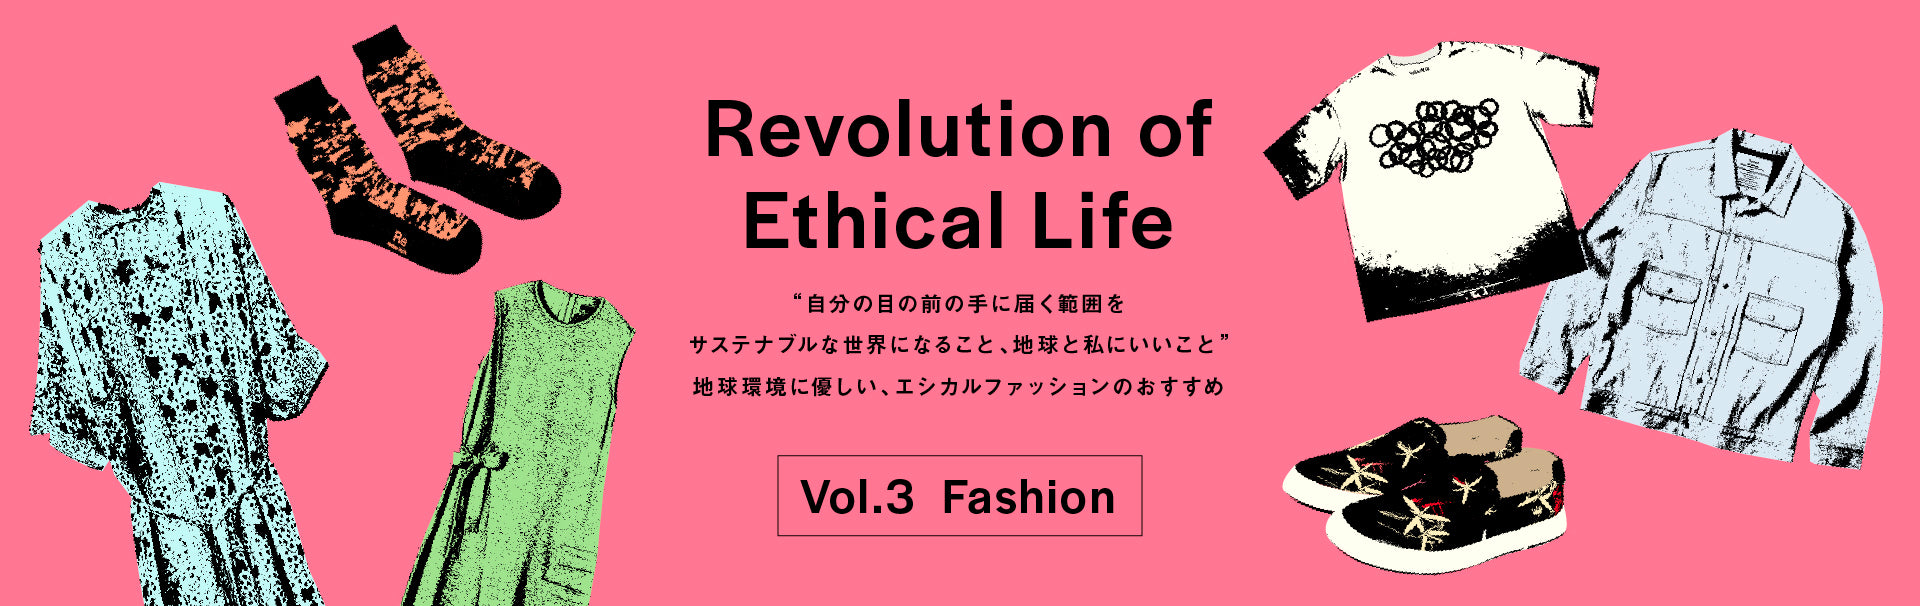 “Revolution of Ethical Life” Vol.3 Fashion